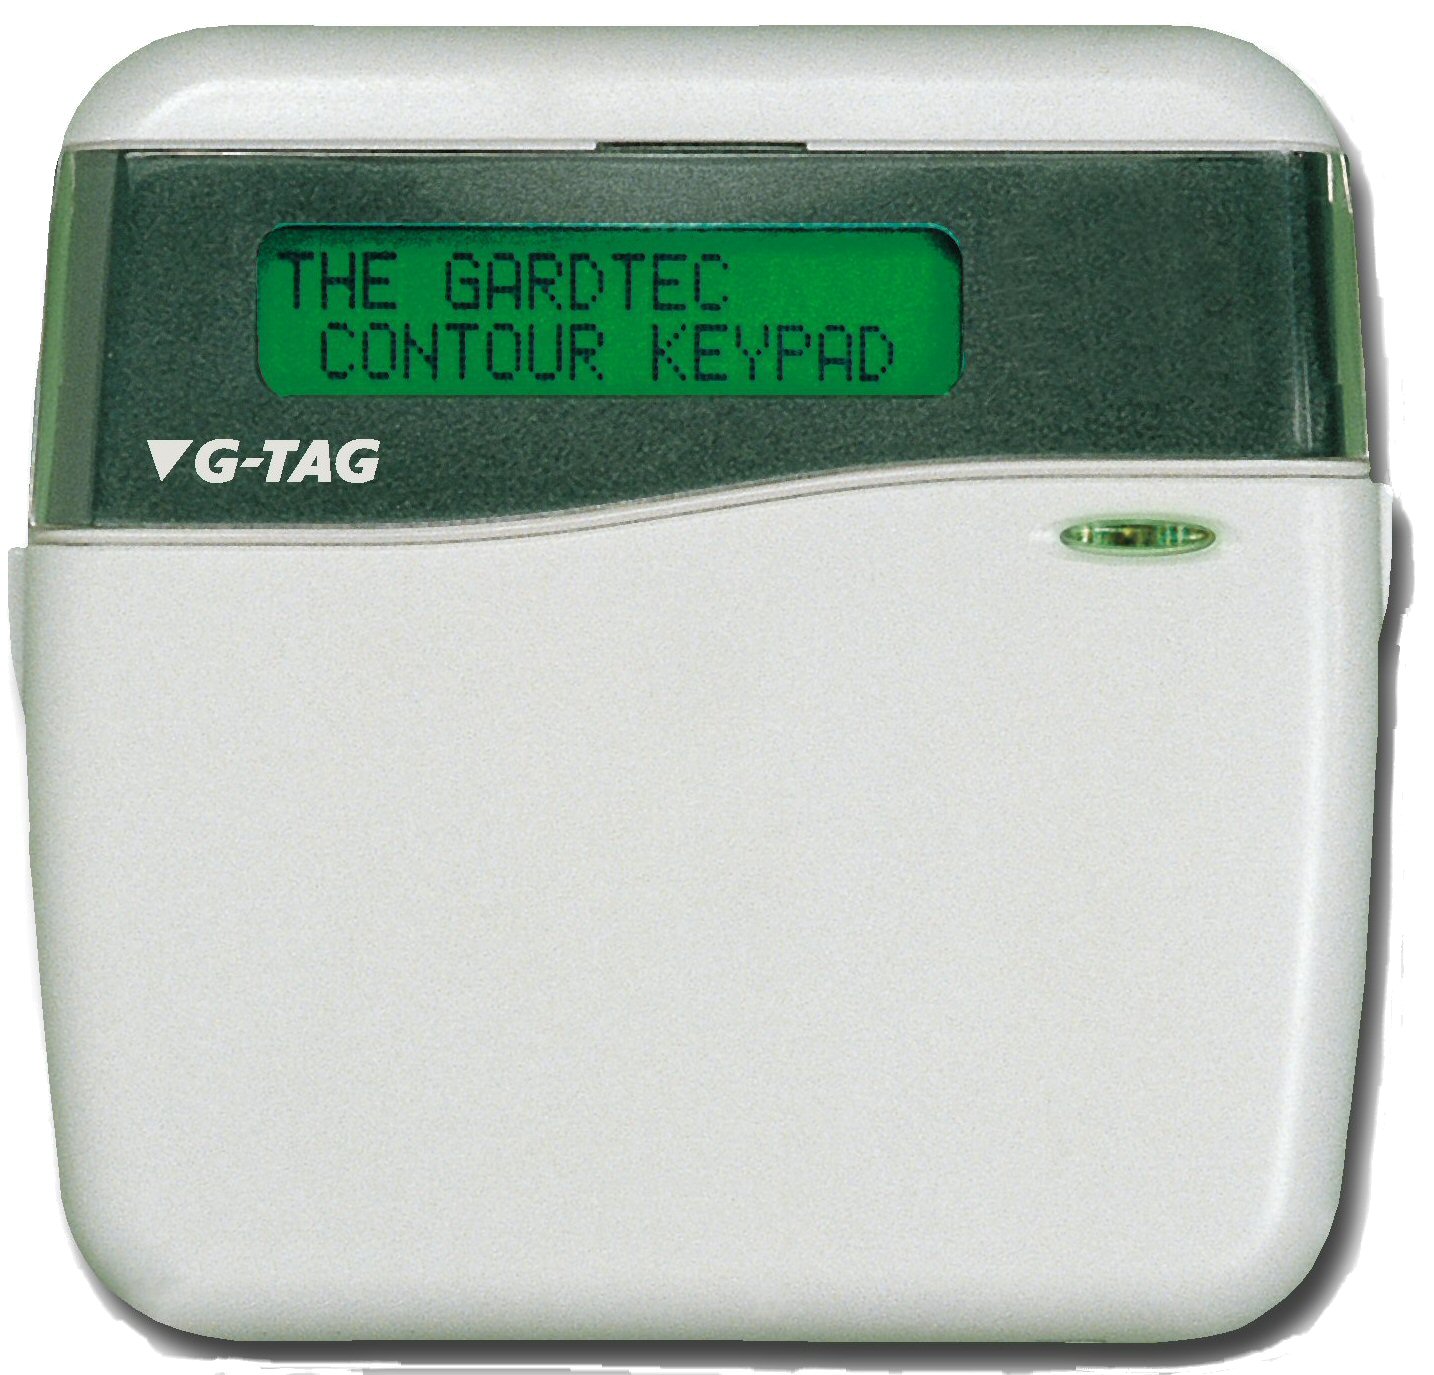 Risco Gardtec I-Reader G-Tag internal setting white 01156-2